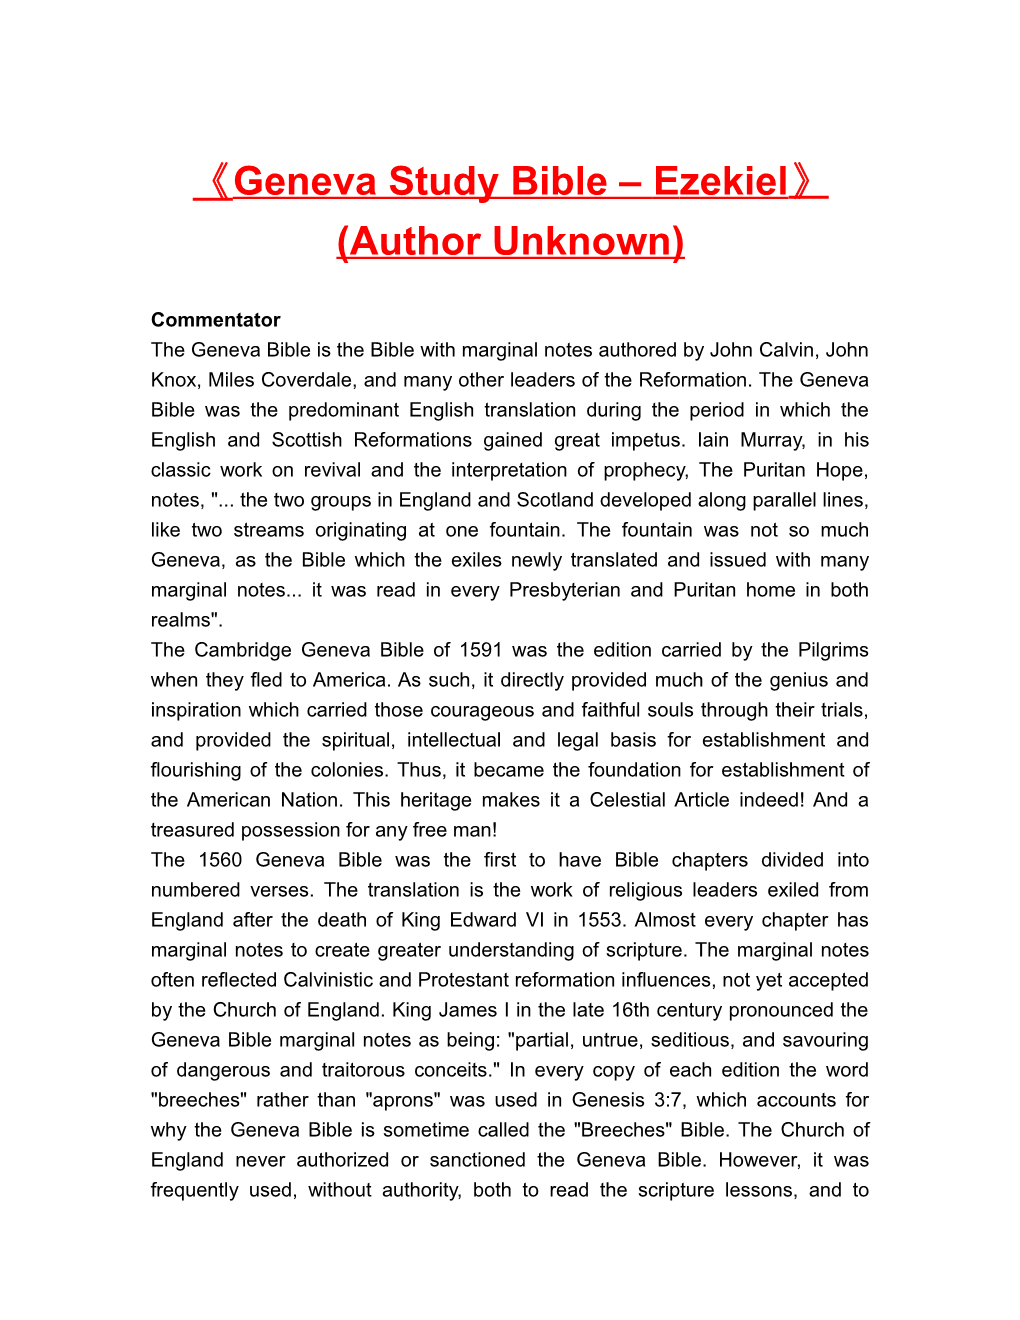 Geneva Study Bible Ezekiel (Author Unknown)